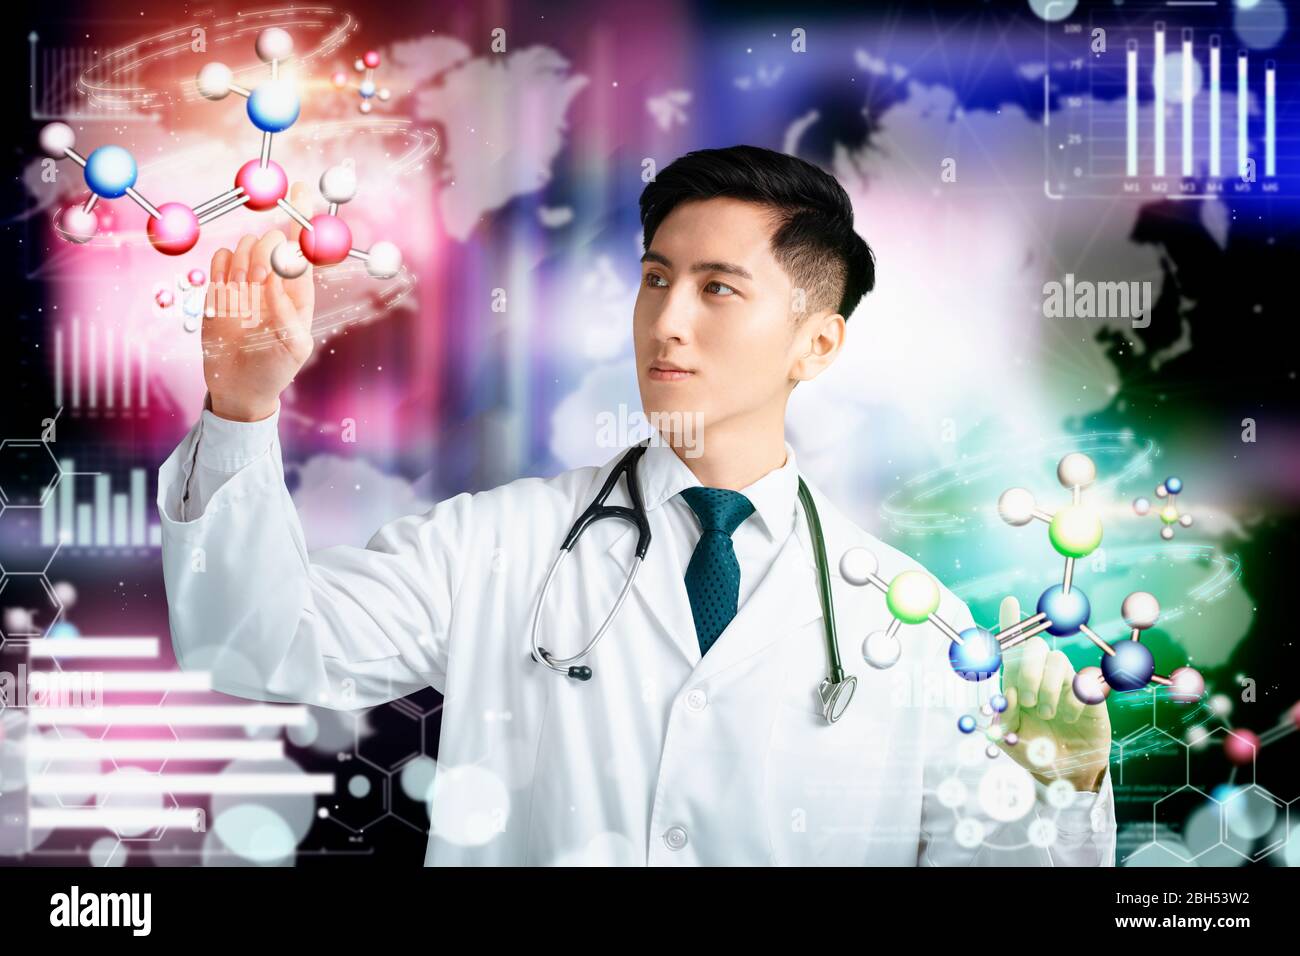 Doctor in futuristic medical concept pressing button Stock Photo